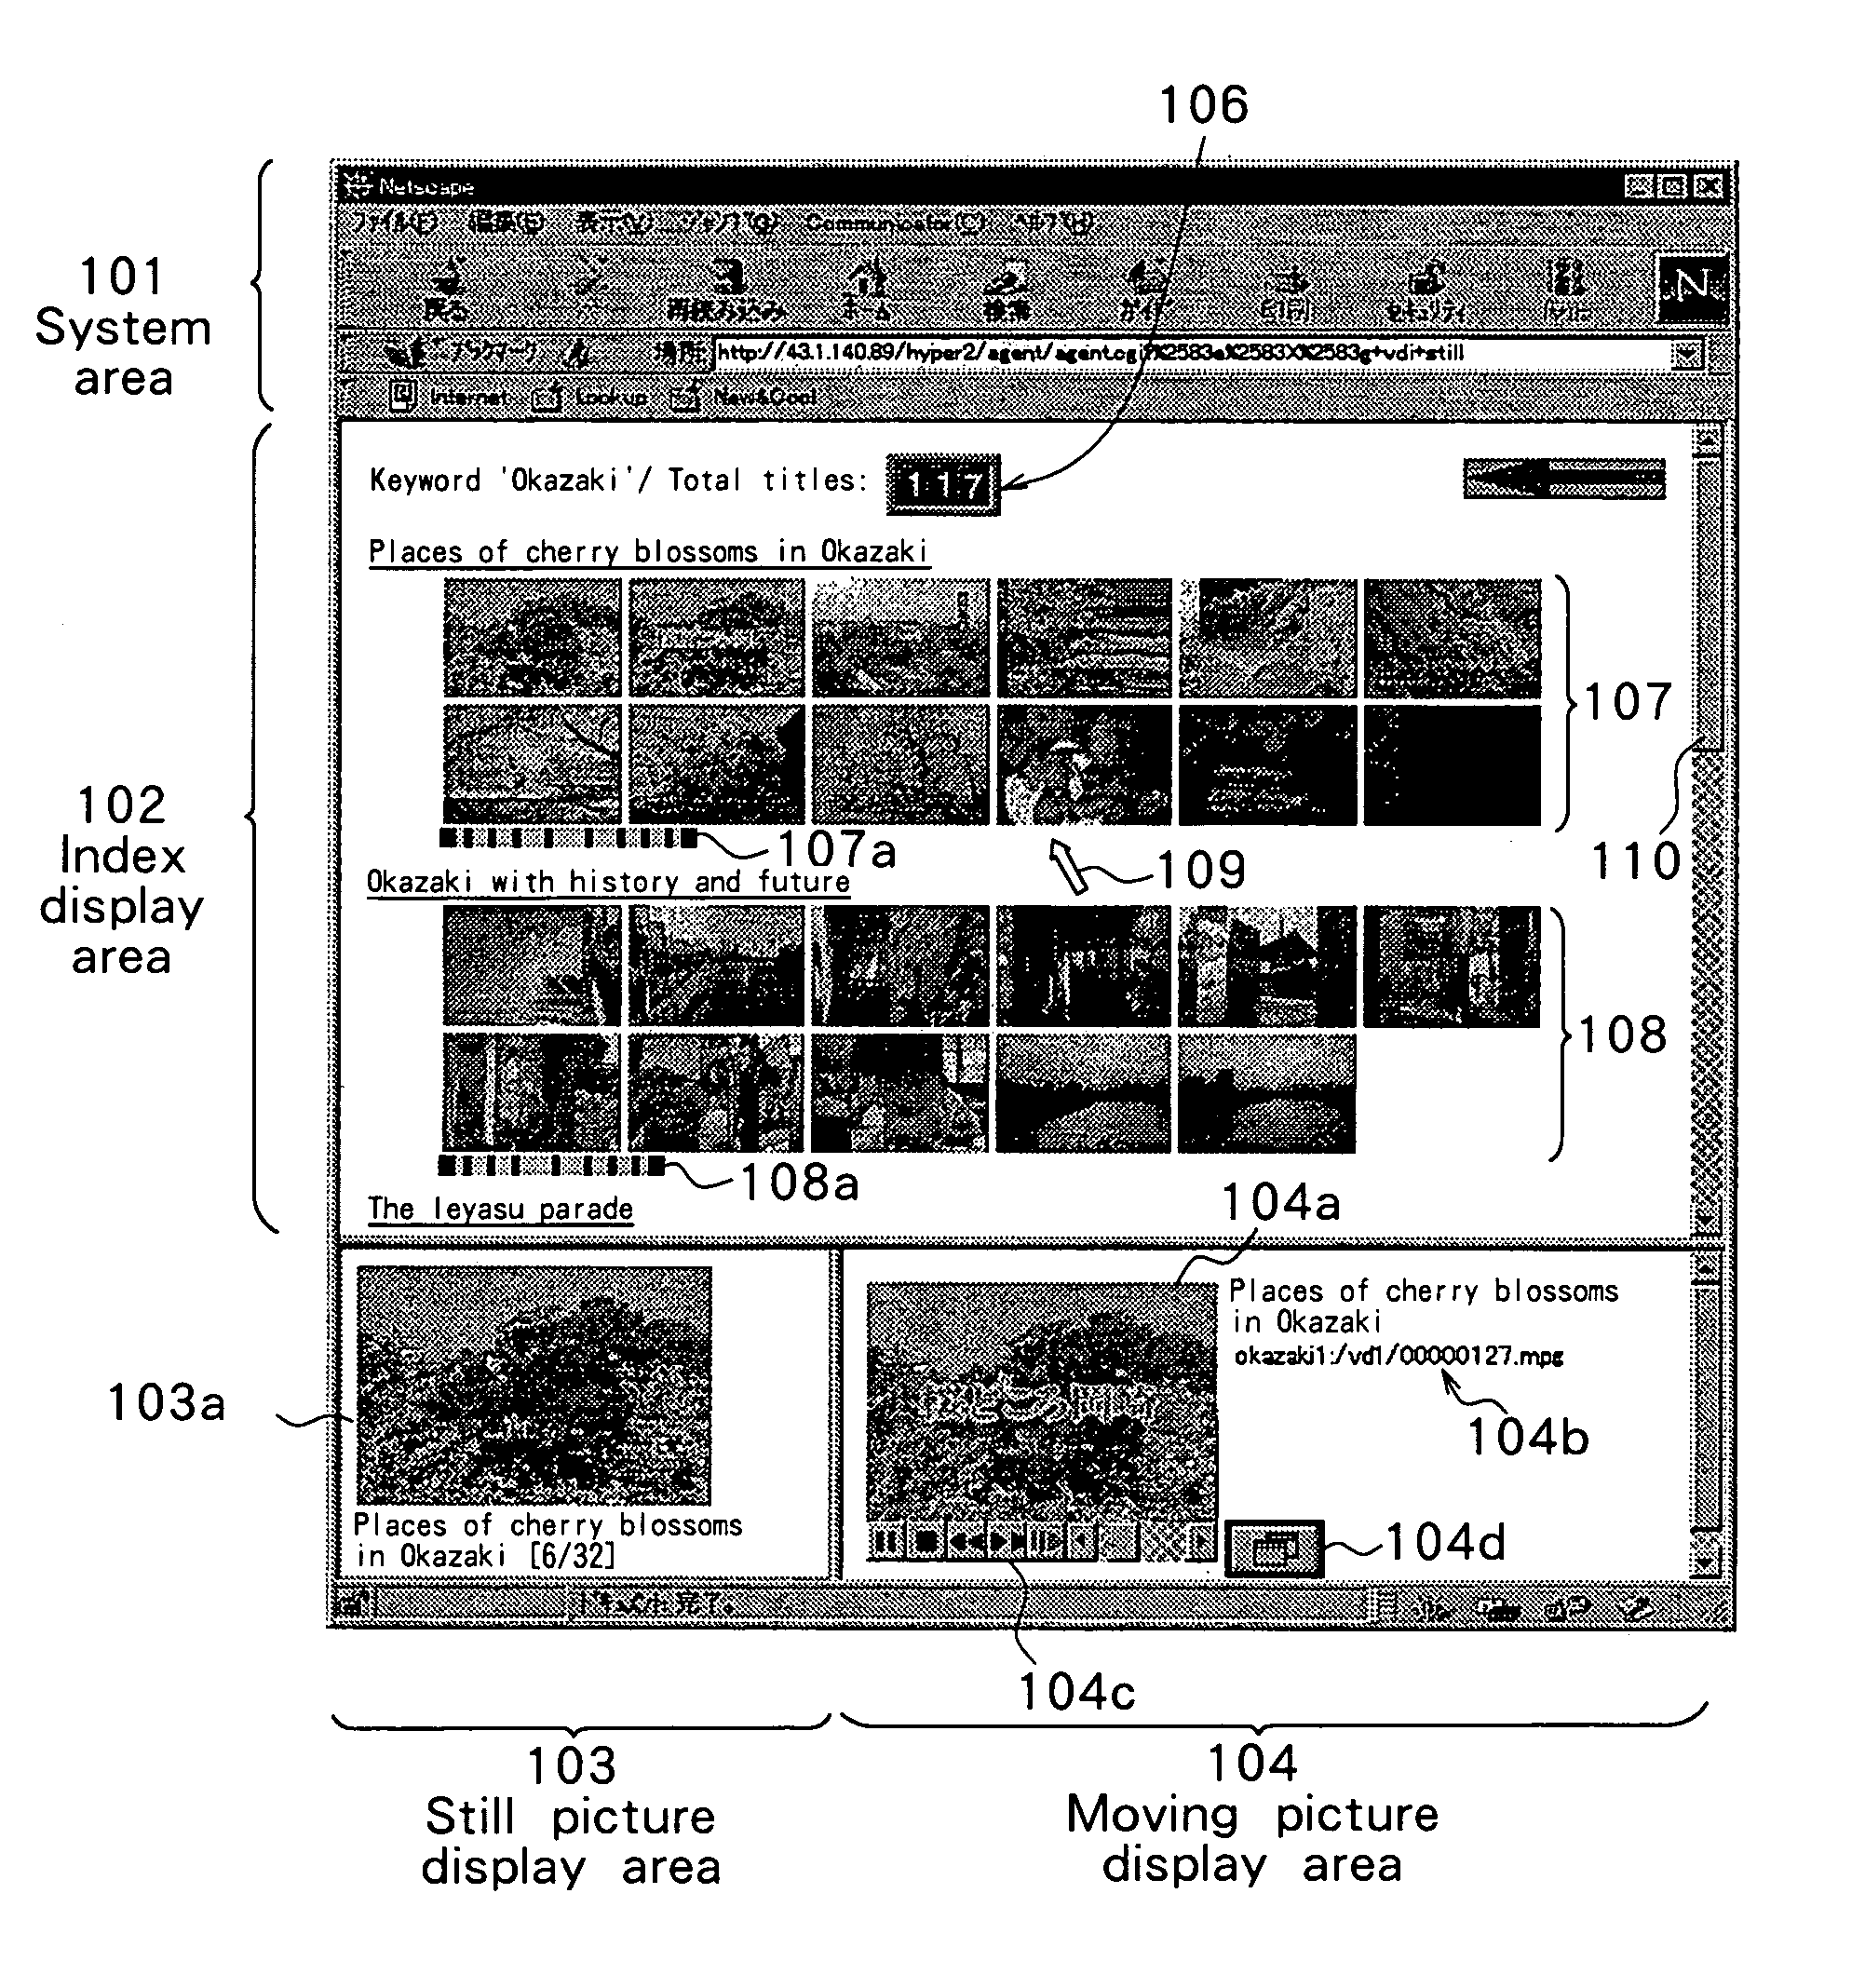 Image generating apparatus and method